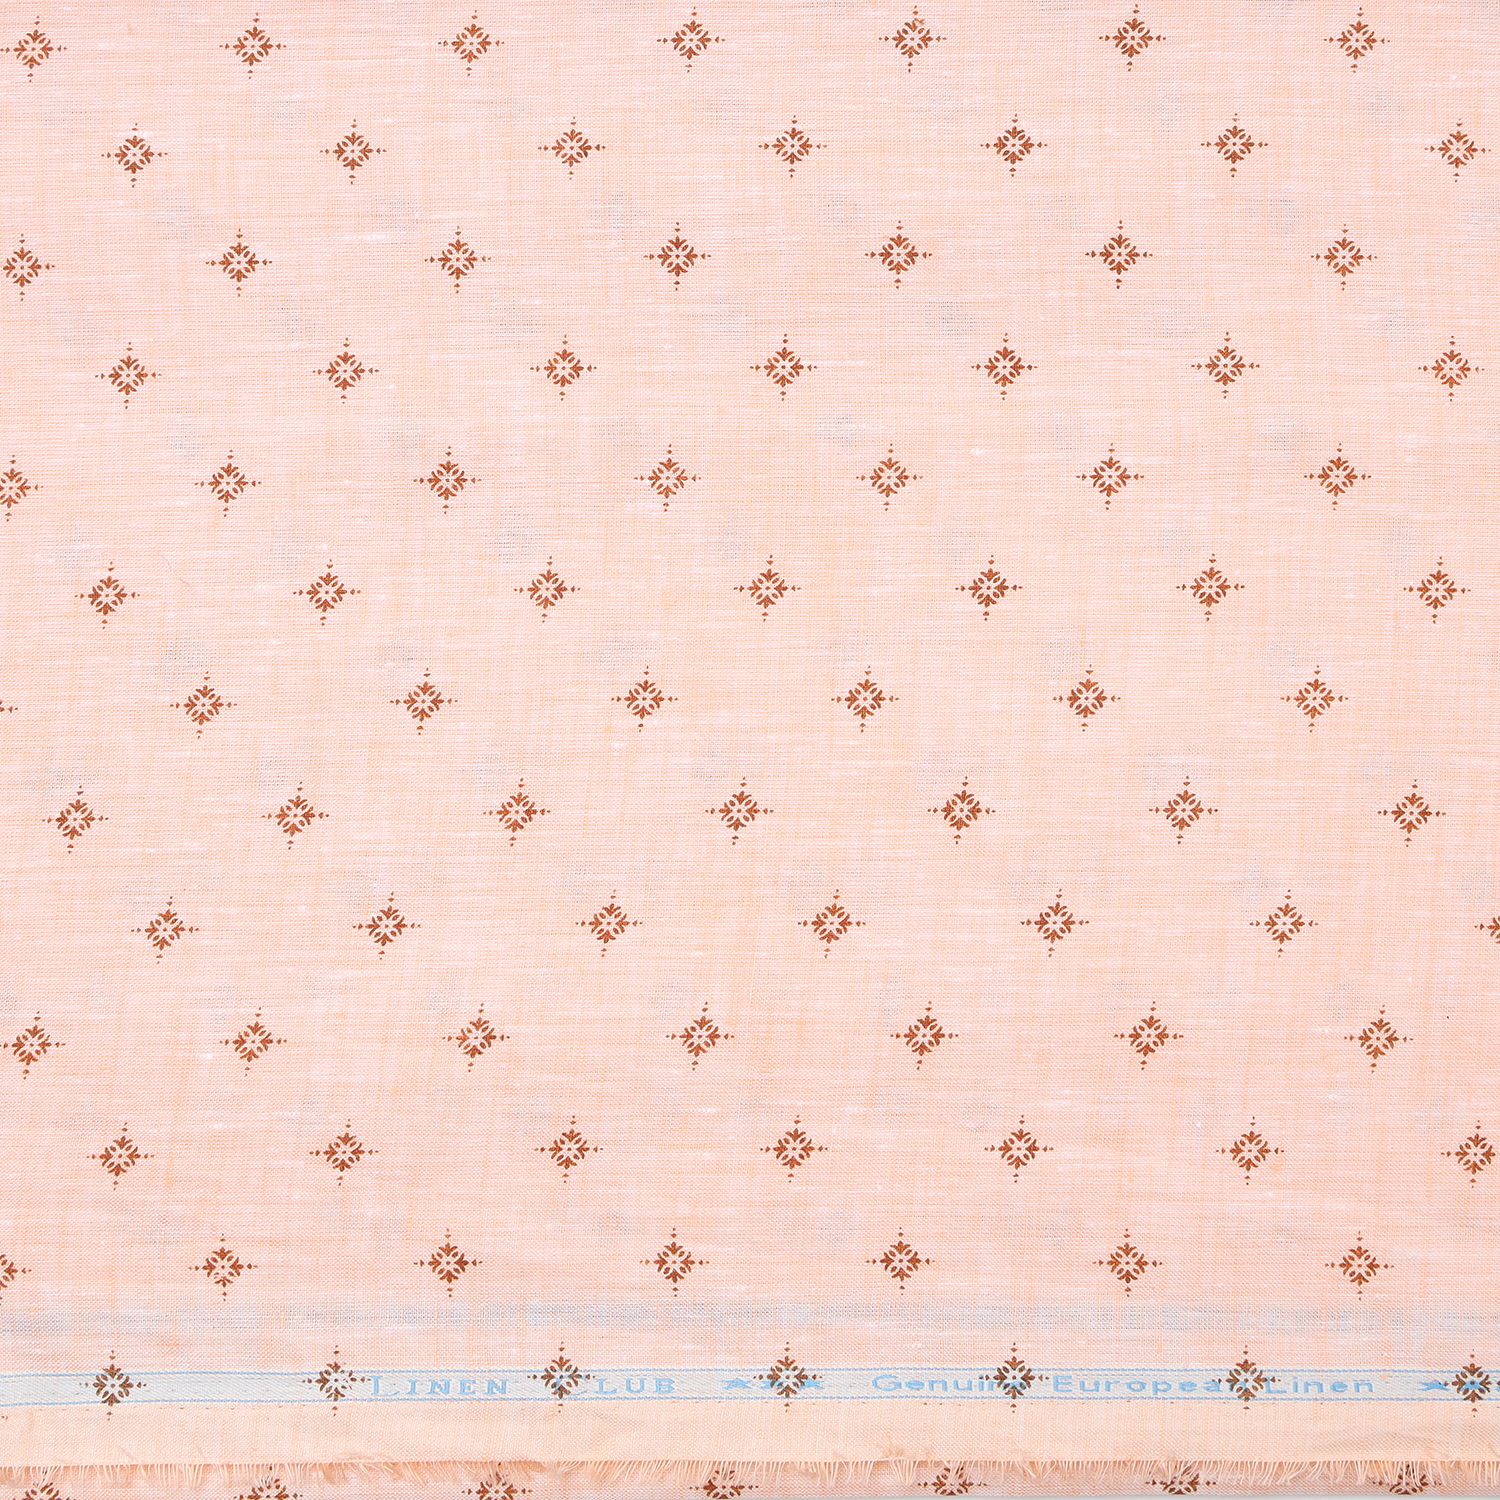 Linen Club Studio Pure Linen ORANGE Printed Shirting Fabric